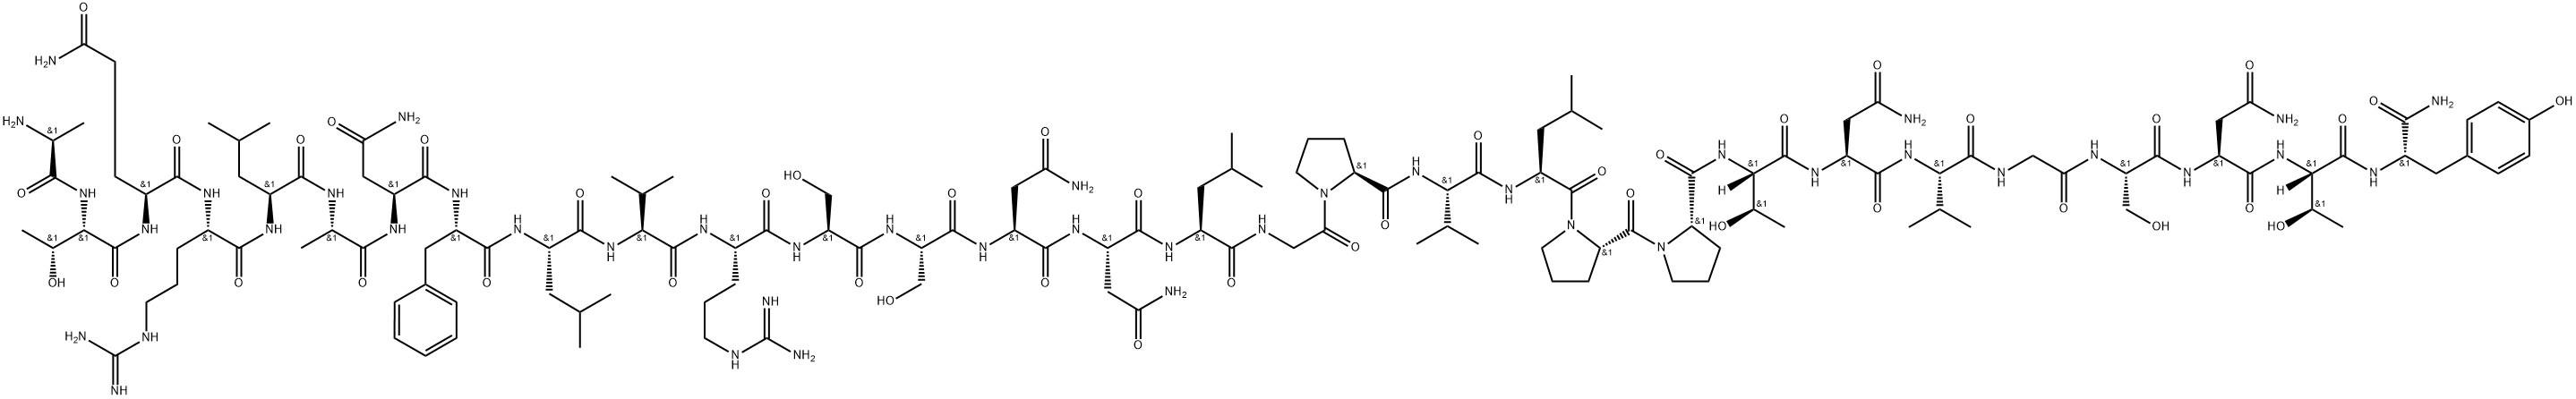 AMYLIN (8-37) (RAT) 结构式